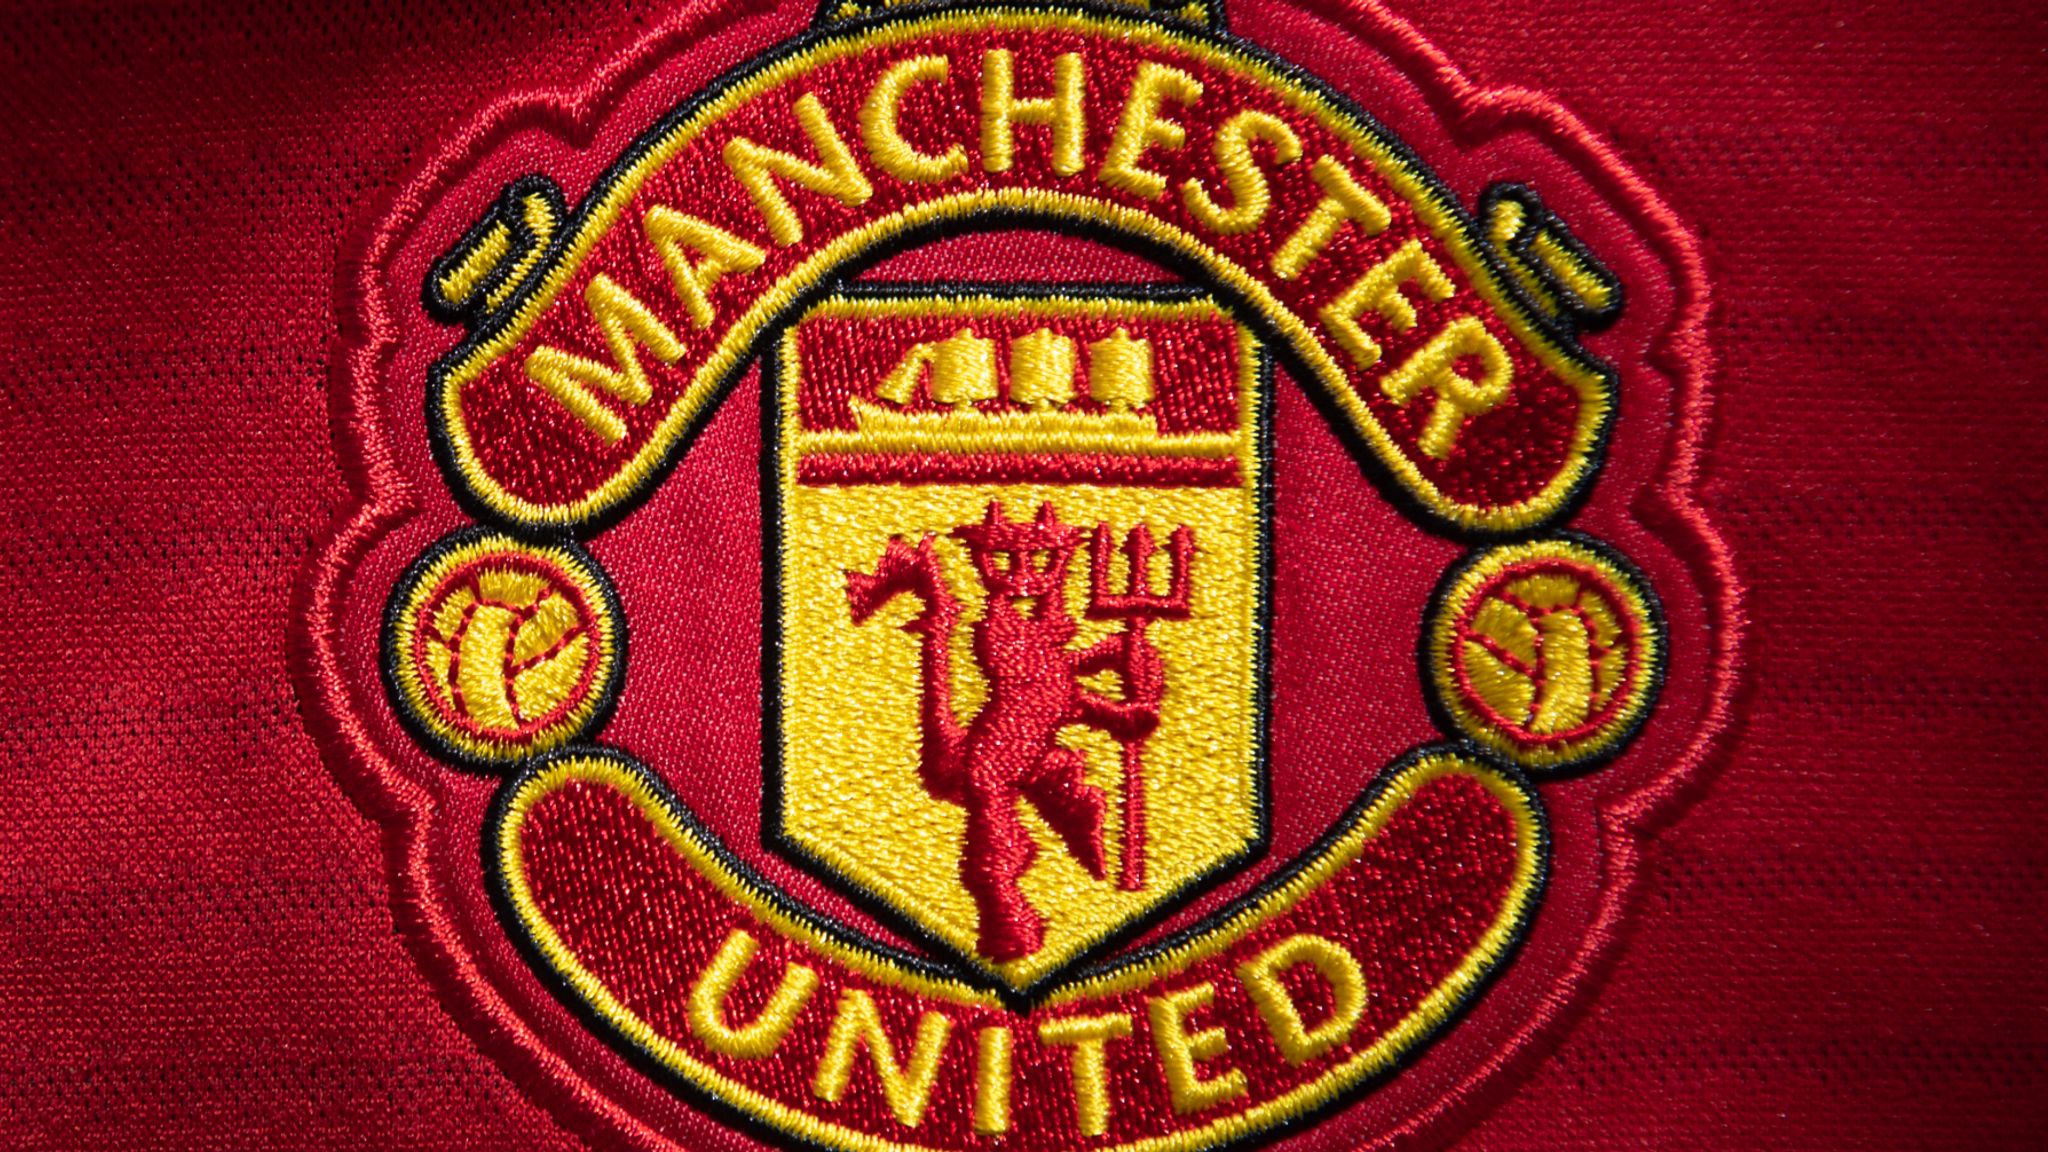 Download free The Esteemed Emblem Of Manchester United Football Club  Wallpaper - MrWallpaper.com